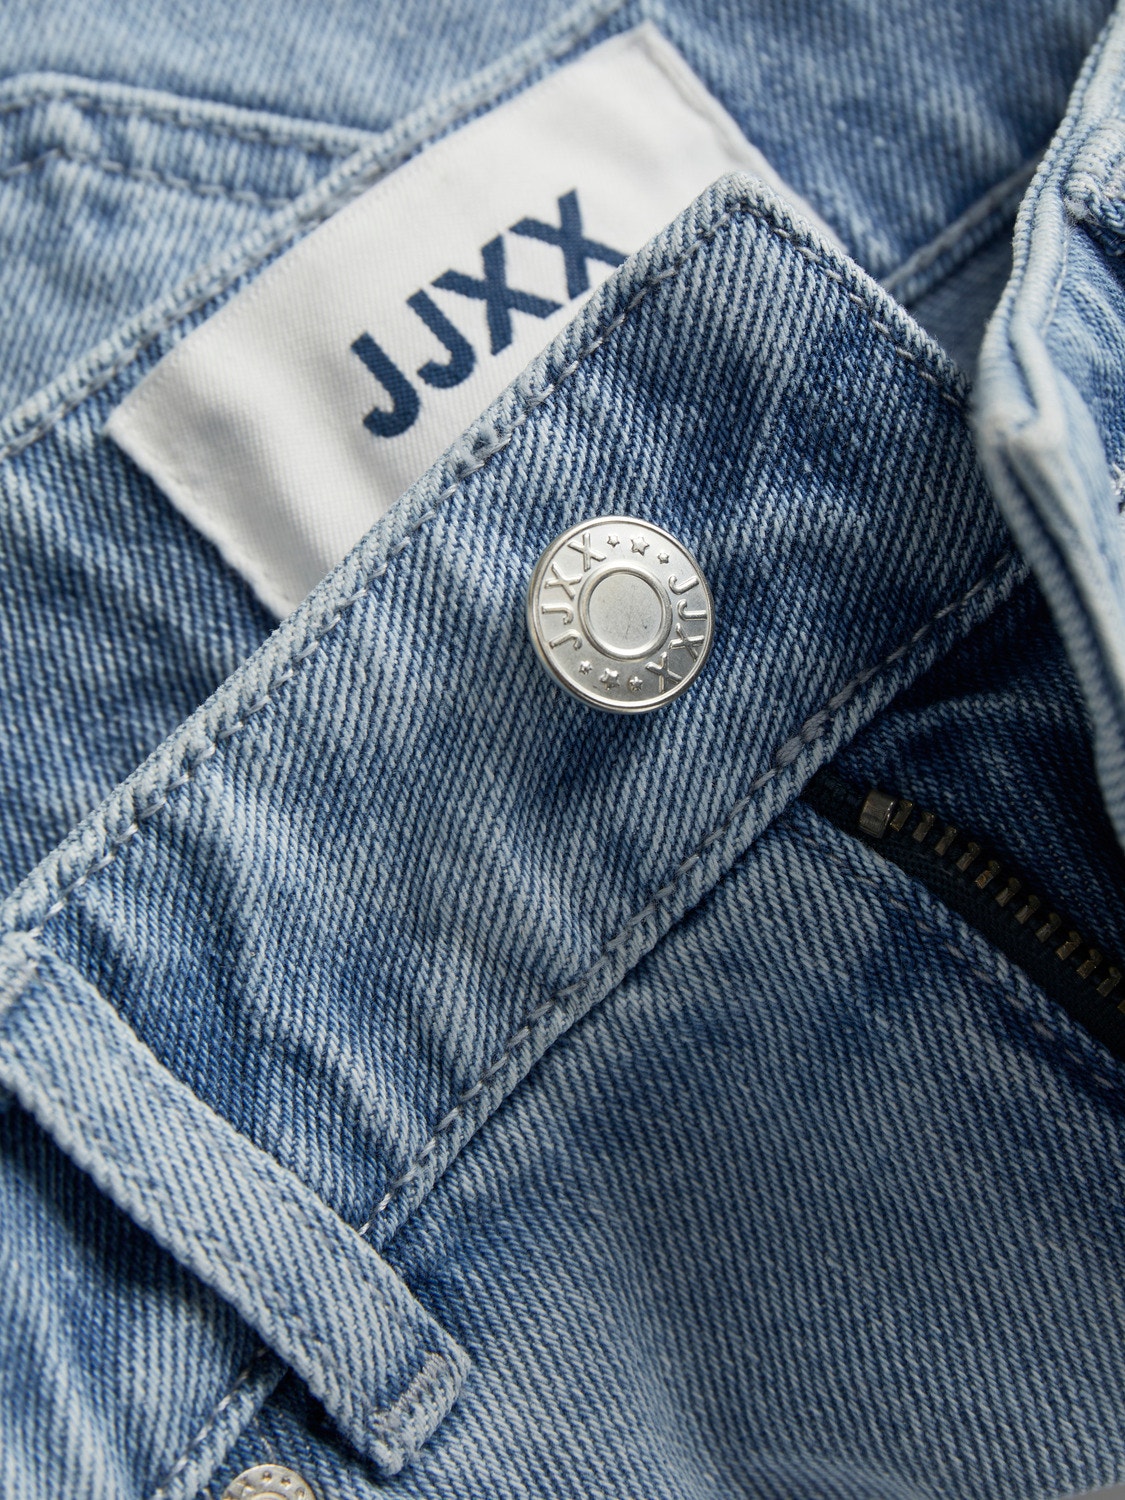 JJXX JXNANY Jeans Shorts -Light Blue Denim - 12250116